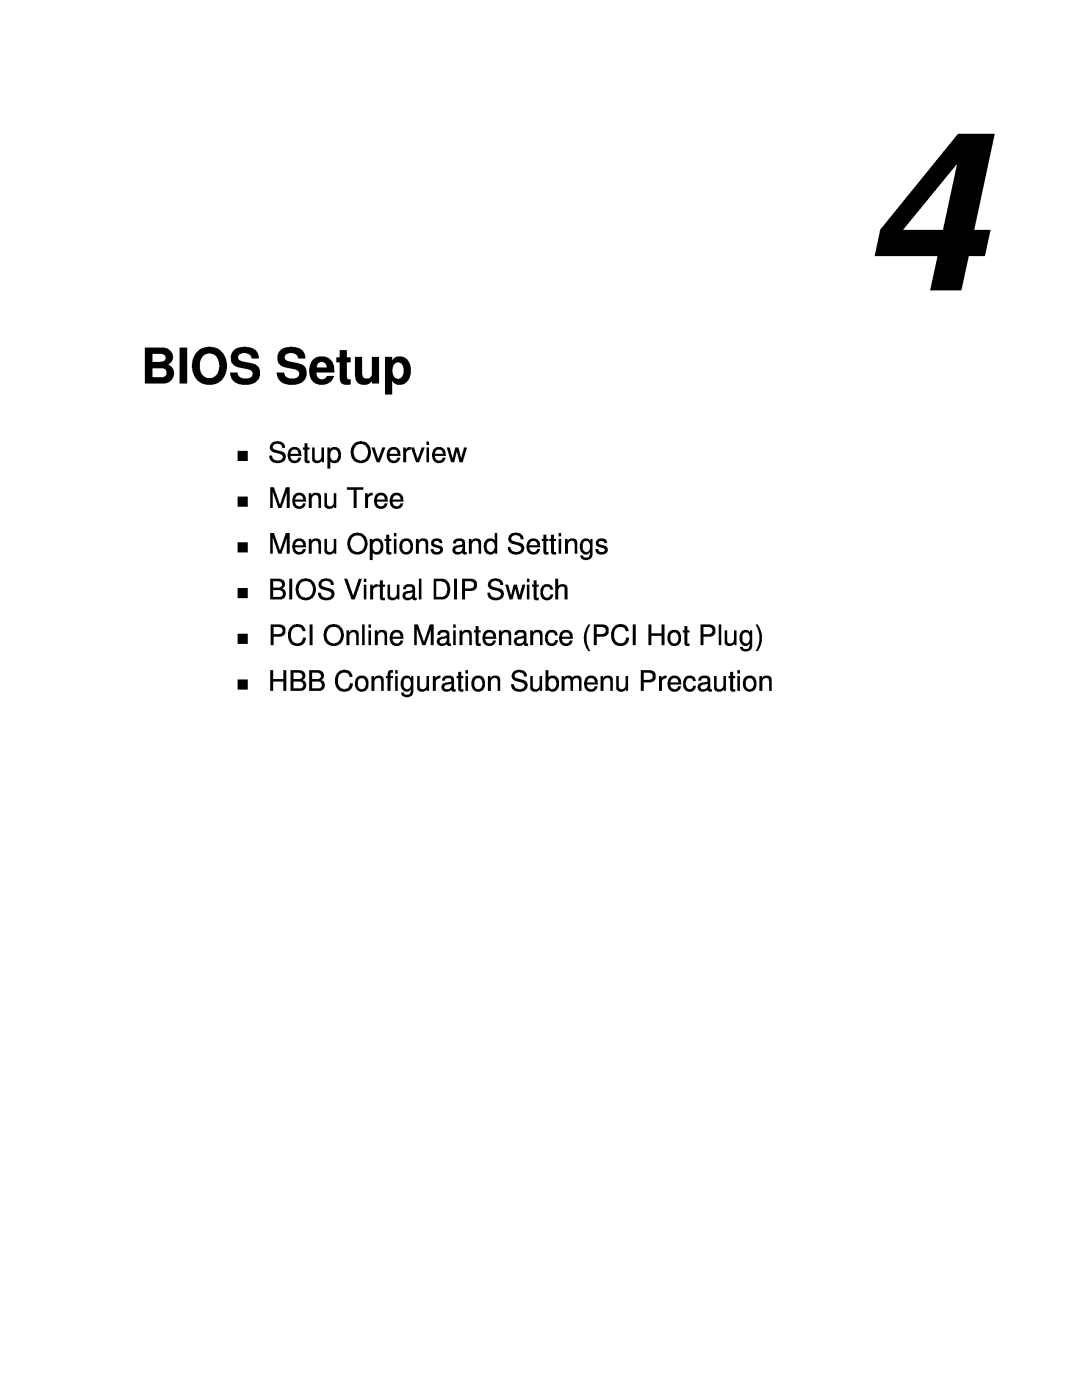 NEC 1080Xd manual BIOS Setup, Setup Overview Menu Tree Menu Options and Settings, HBB Configuration Submenu Precaution 